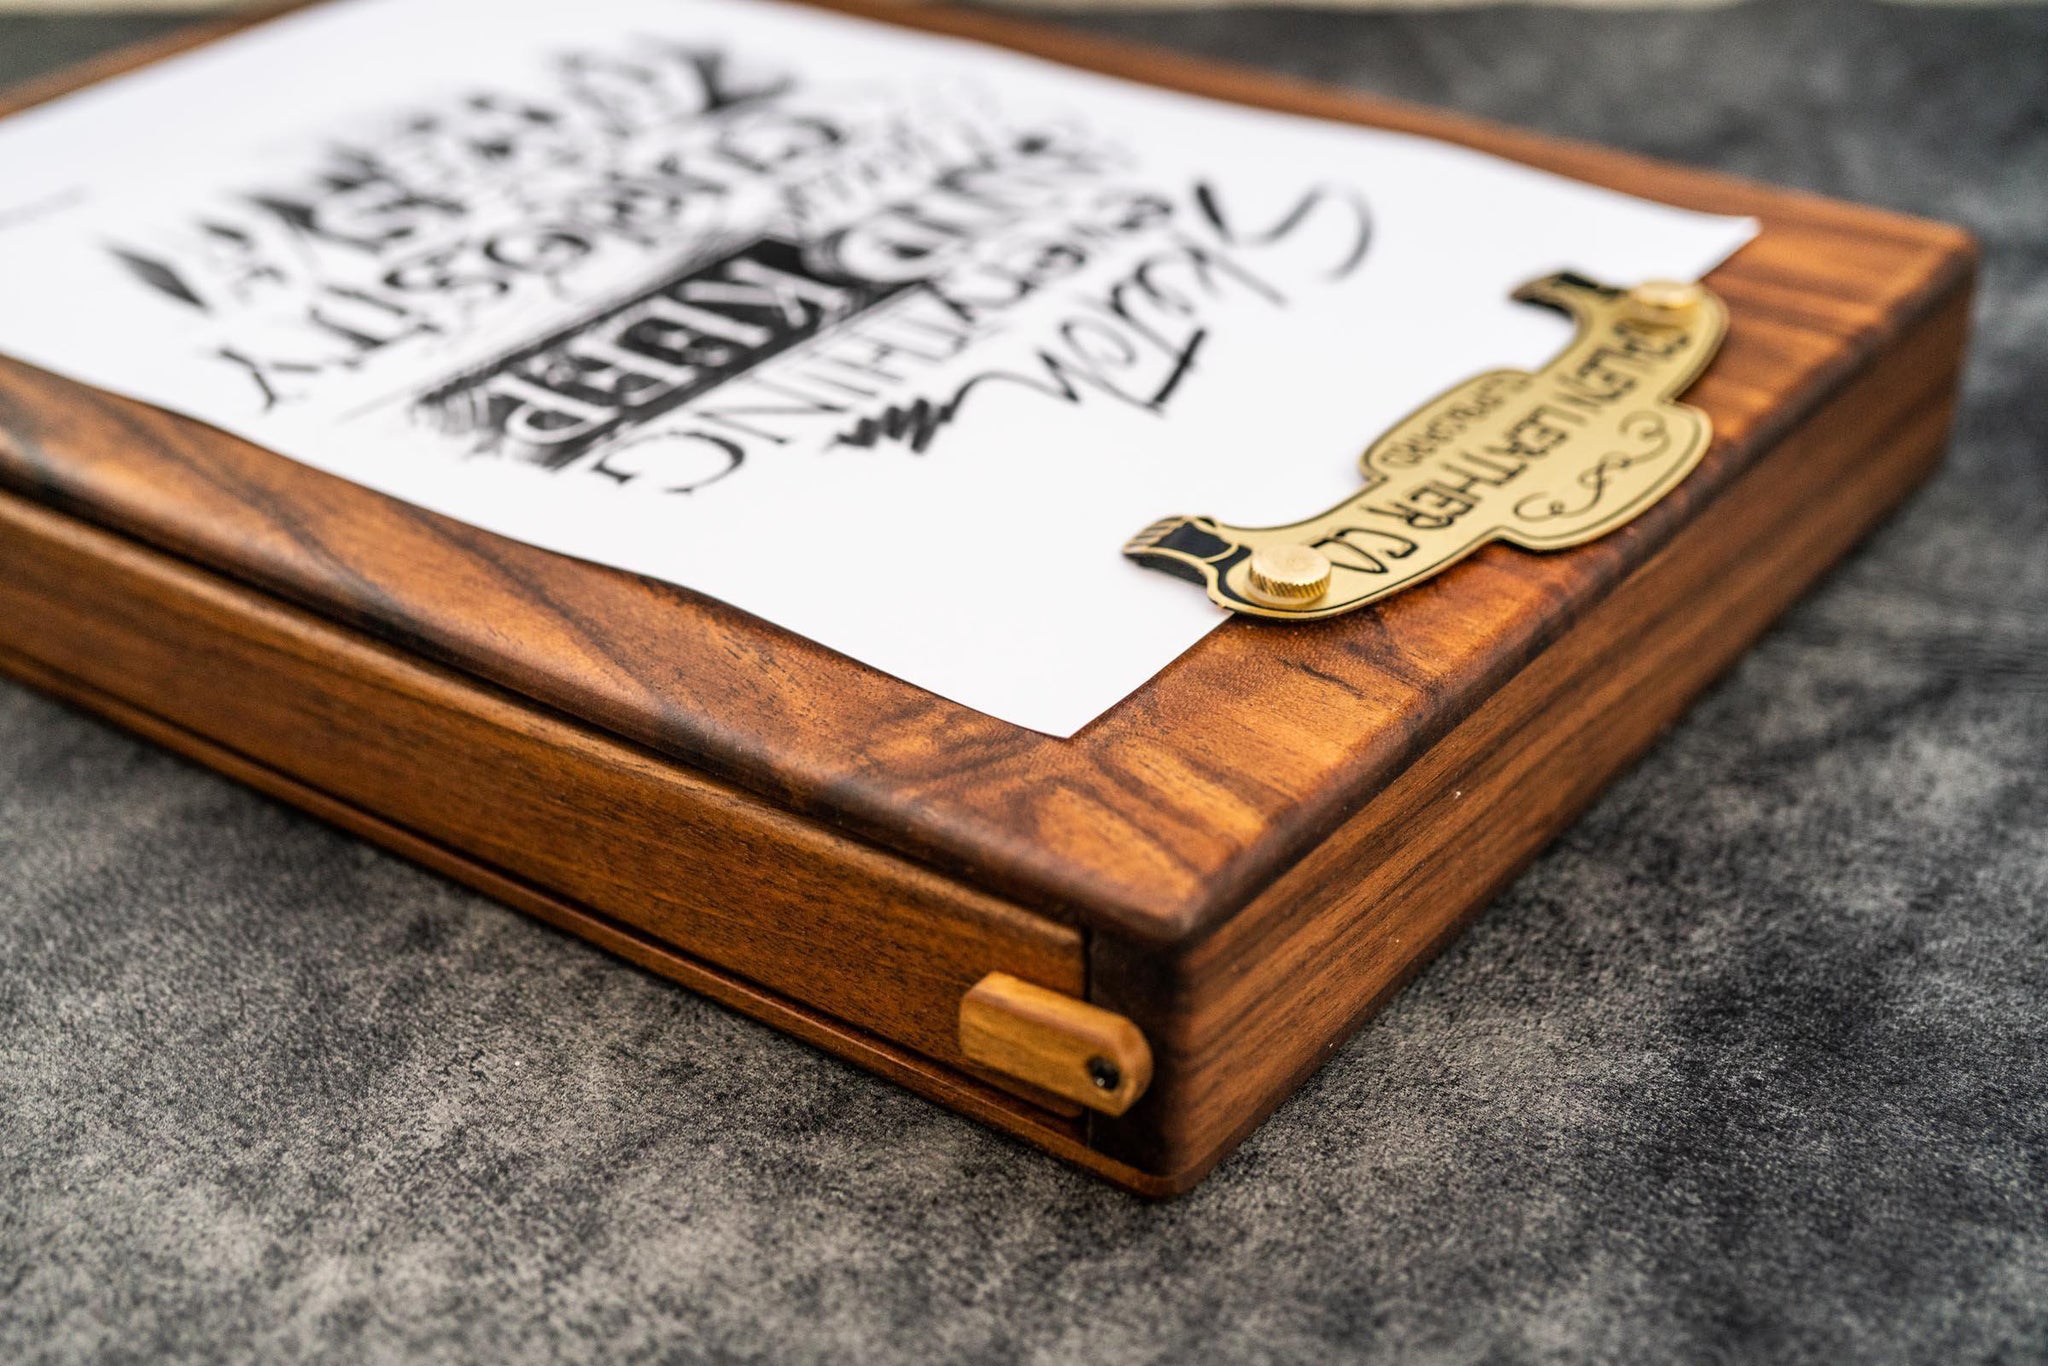 Handmade Wooden Sketchbox - Made From Walnut Wood